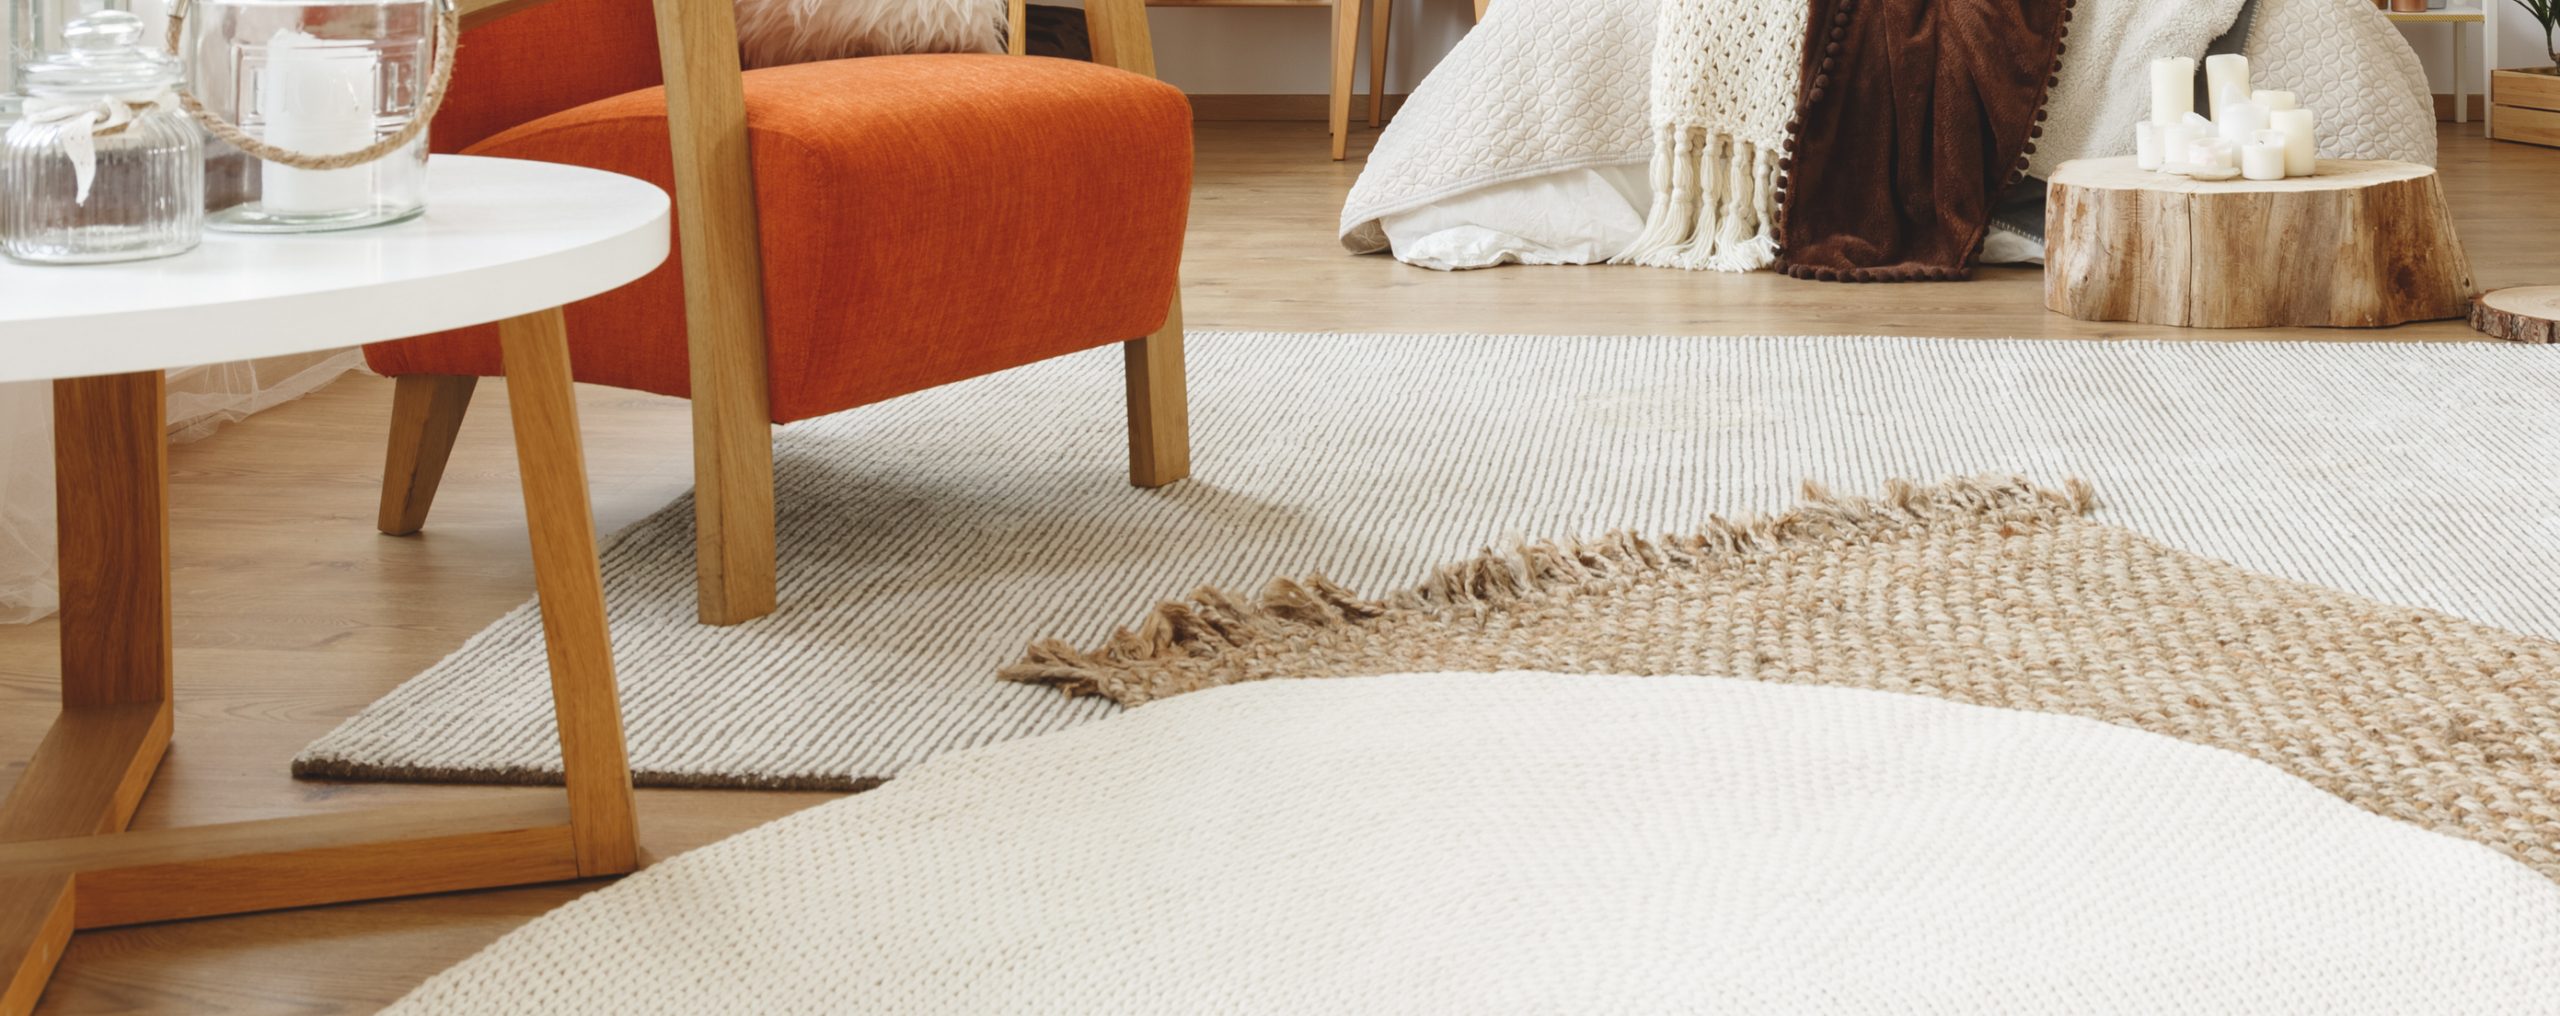 Best Rugs For Hardwood Floors, Carpet Pads For Area Rugs On Hardwood Floors